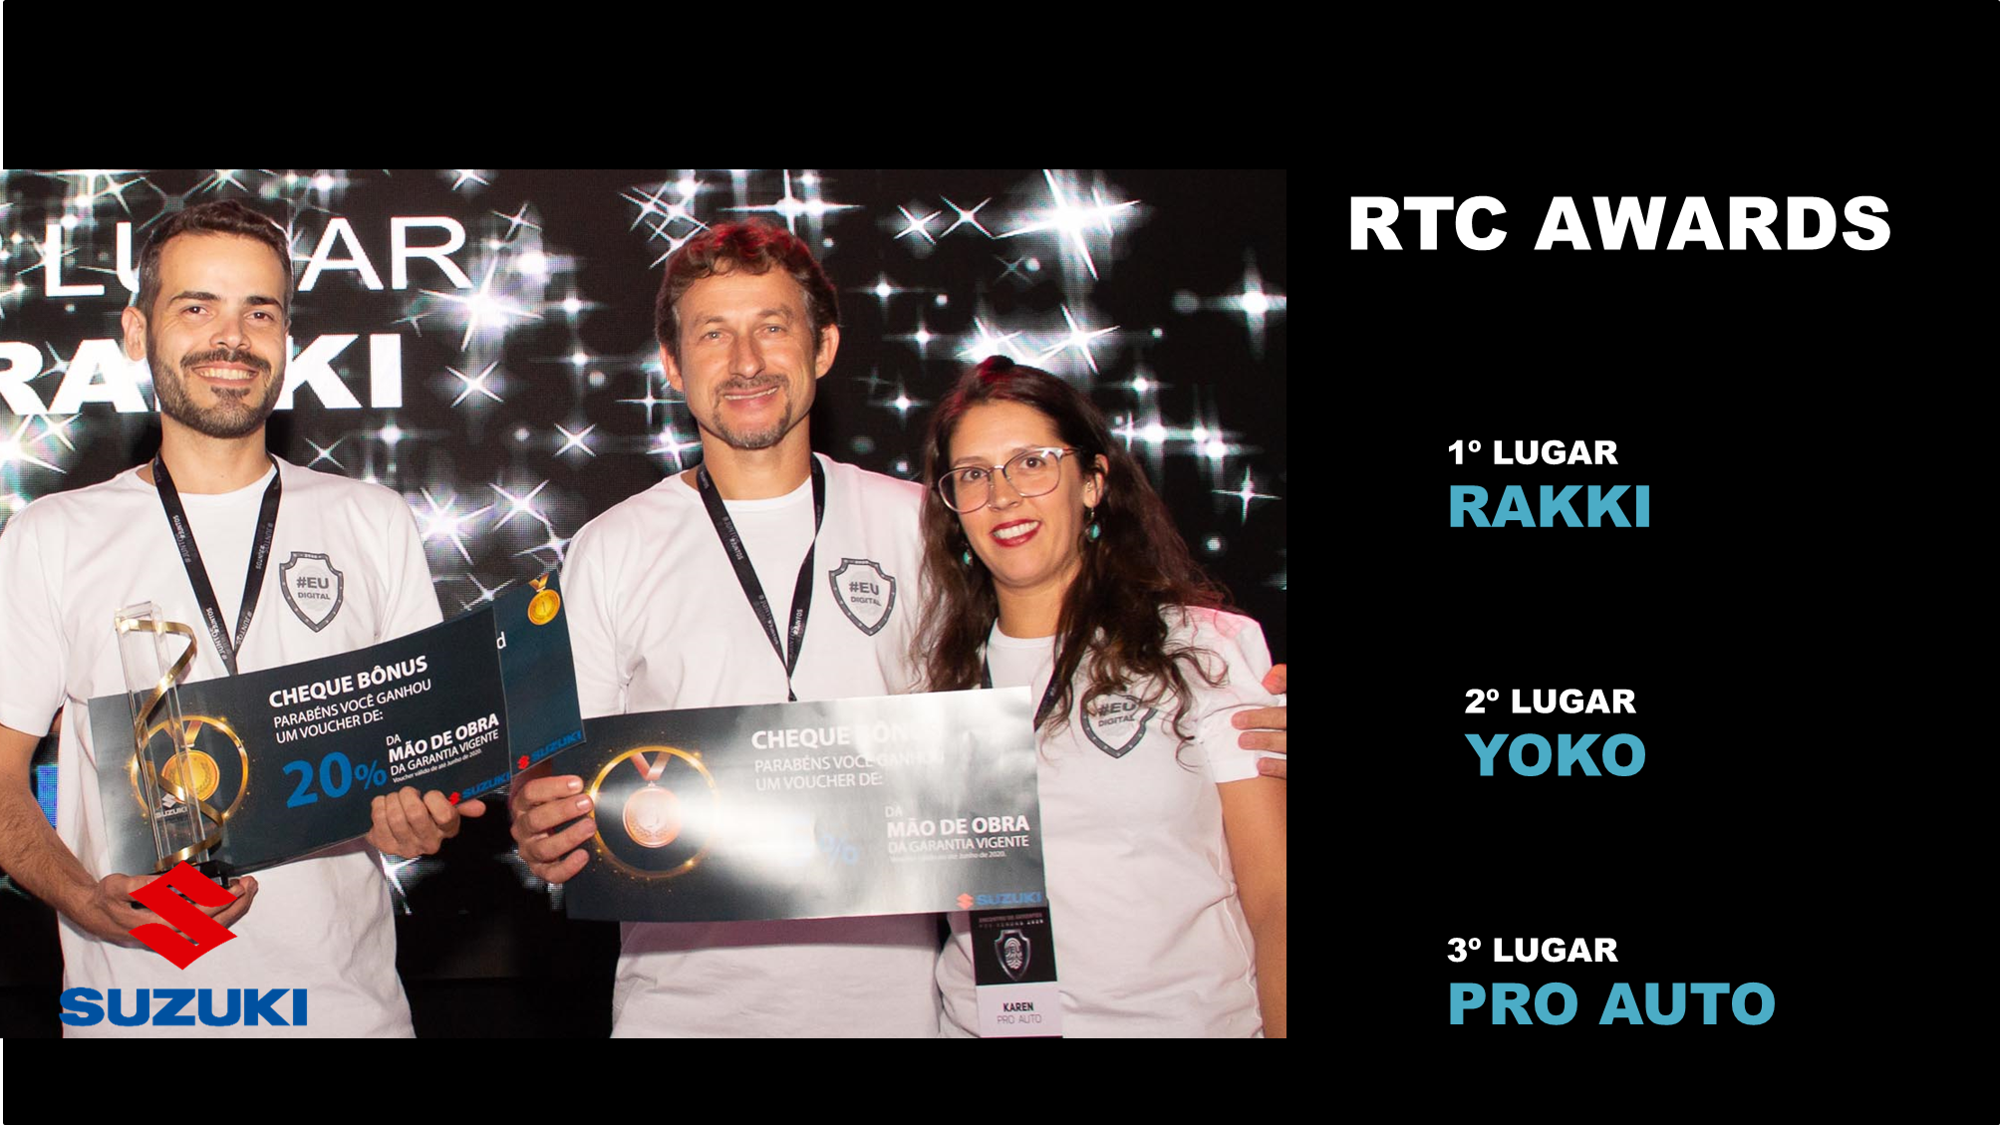 RTC AWARDS